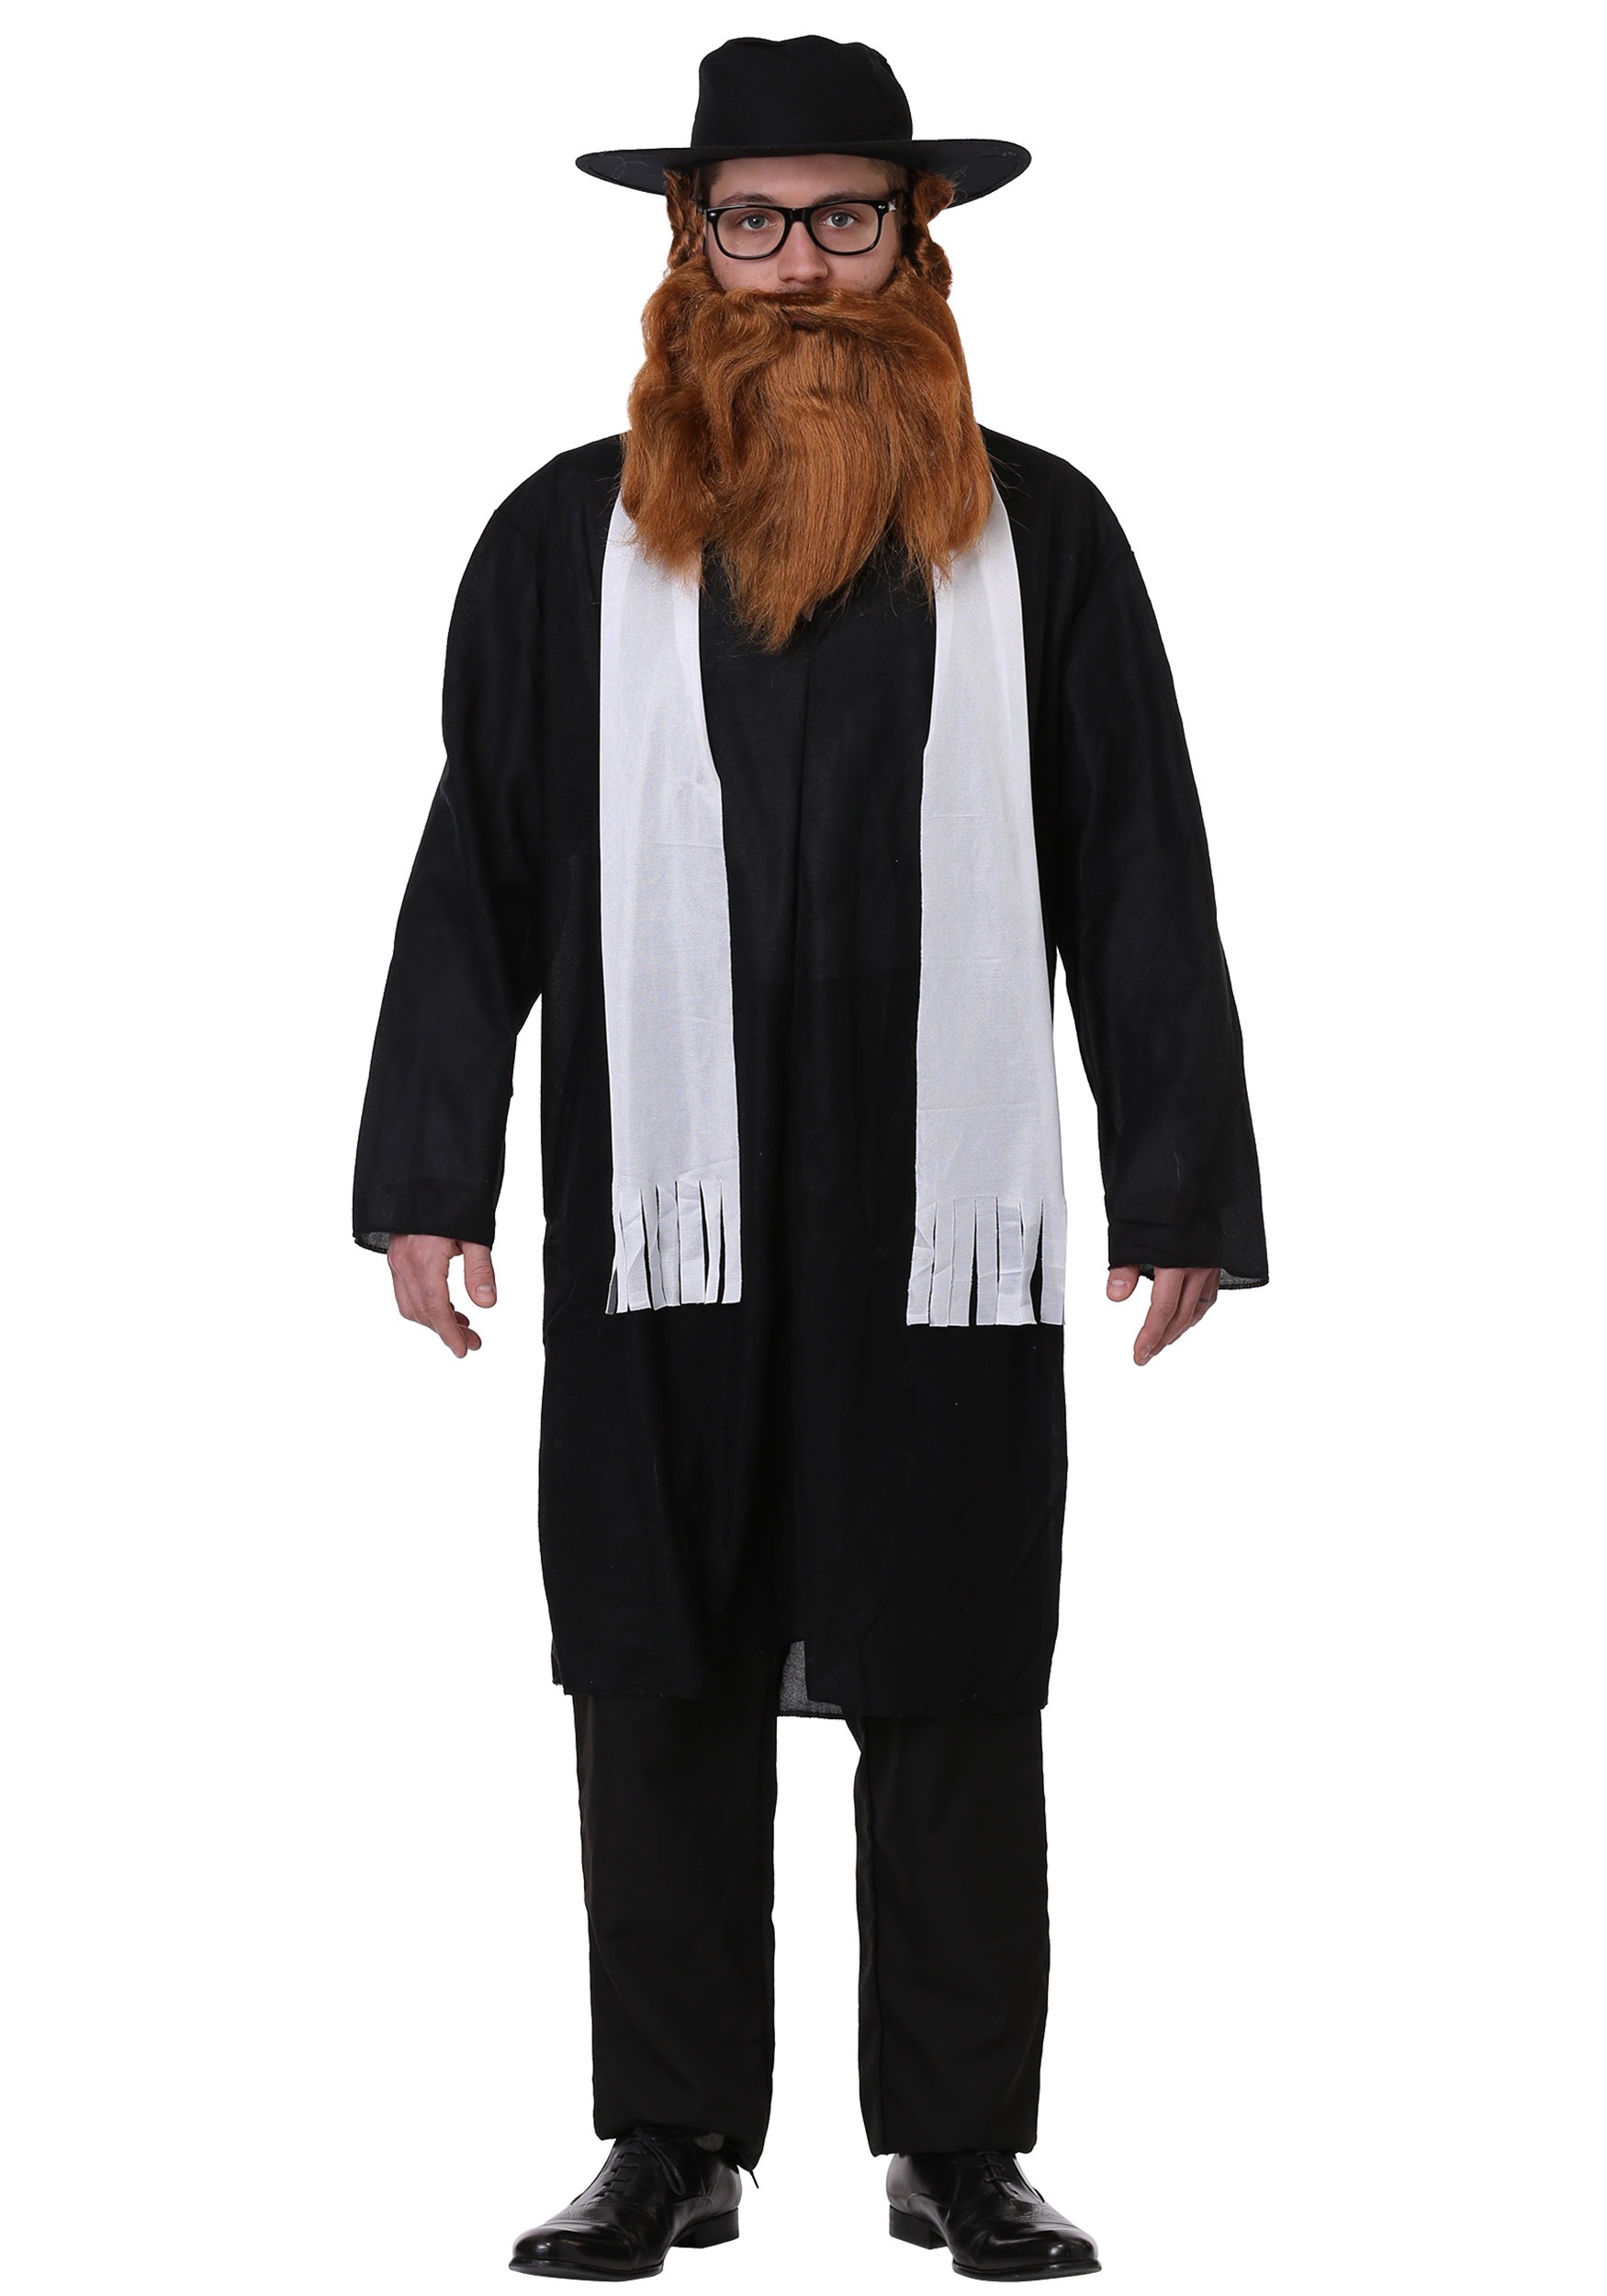 Photos - Fancy Dress Fun World Rabbi Uniform Adult Costume Black FU114144